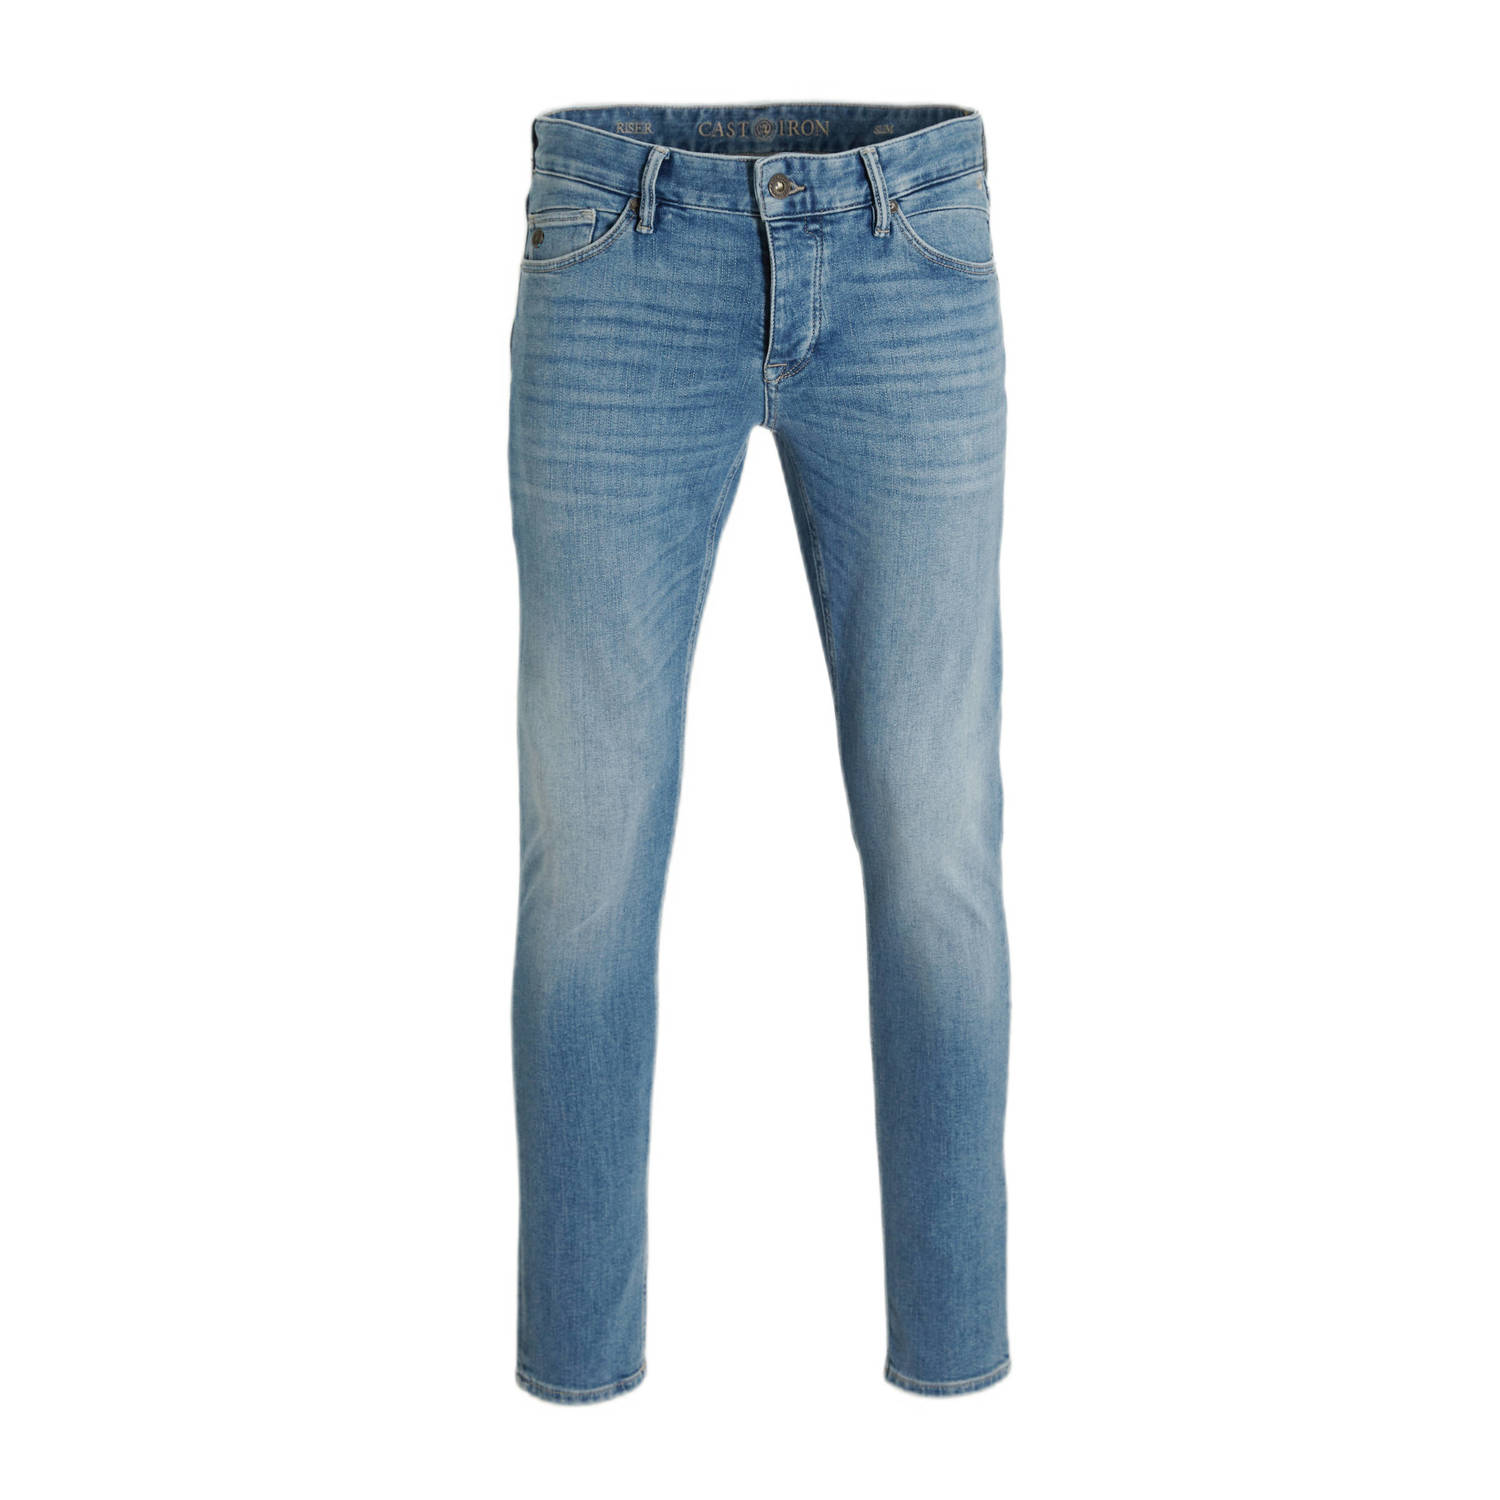 Cast Iron slim fit jeans Riser faded blue wash